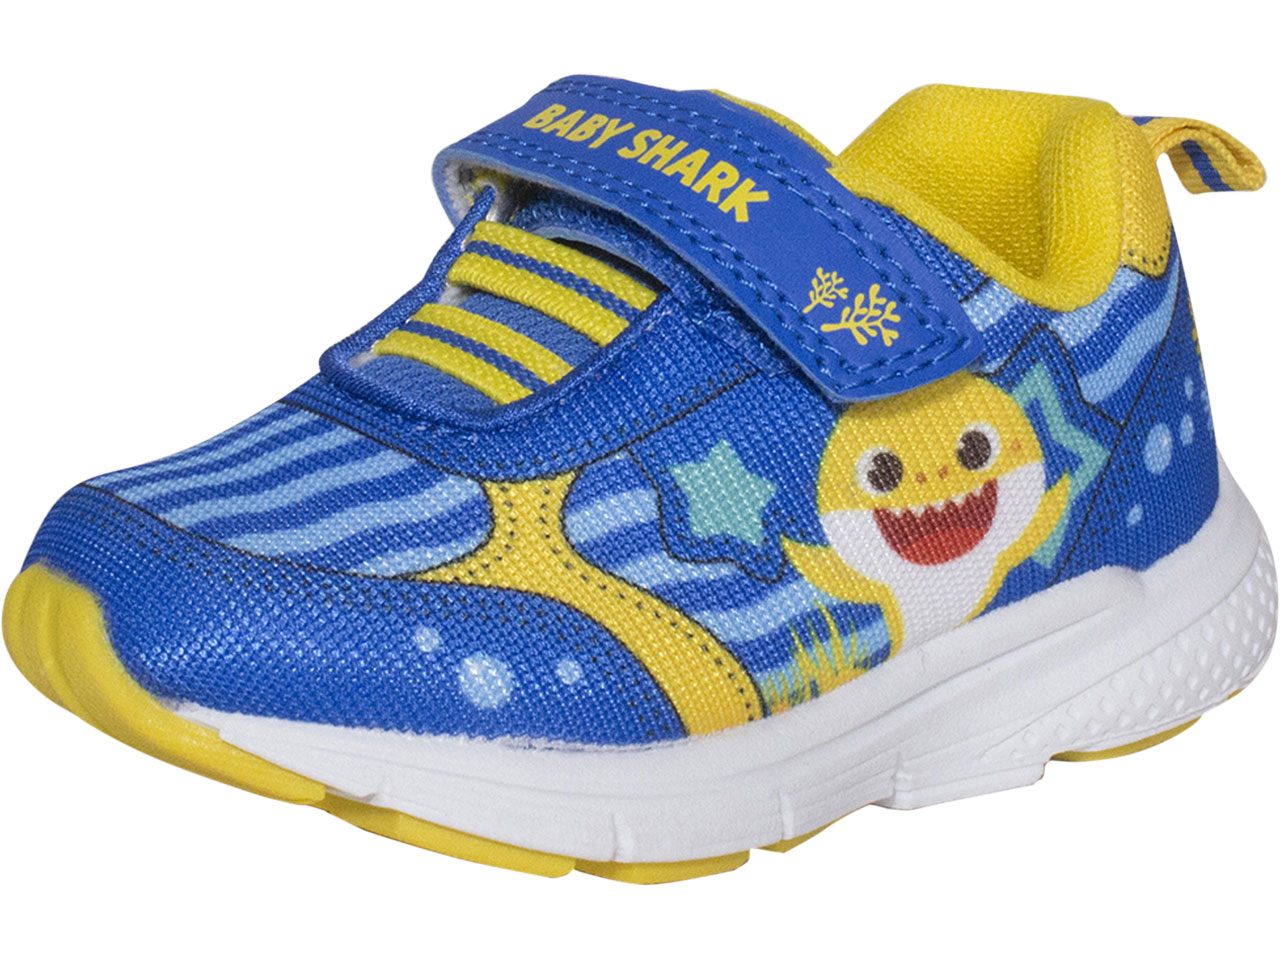 Nickelodeon Pinkfong Baby Shark Toddler Boy's Sneakers Blue/Yellow Sz ...